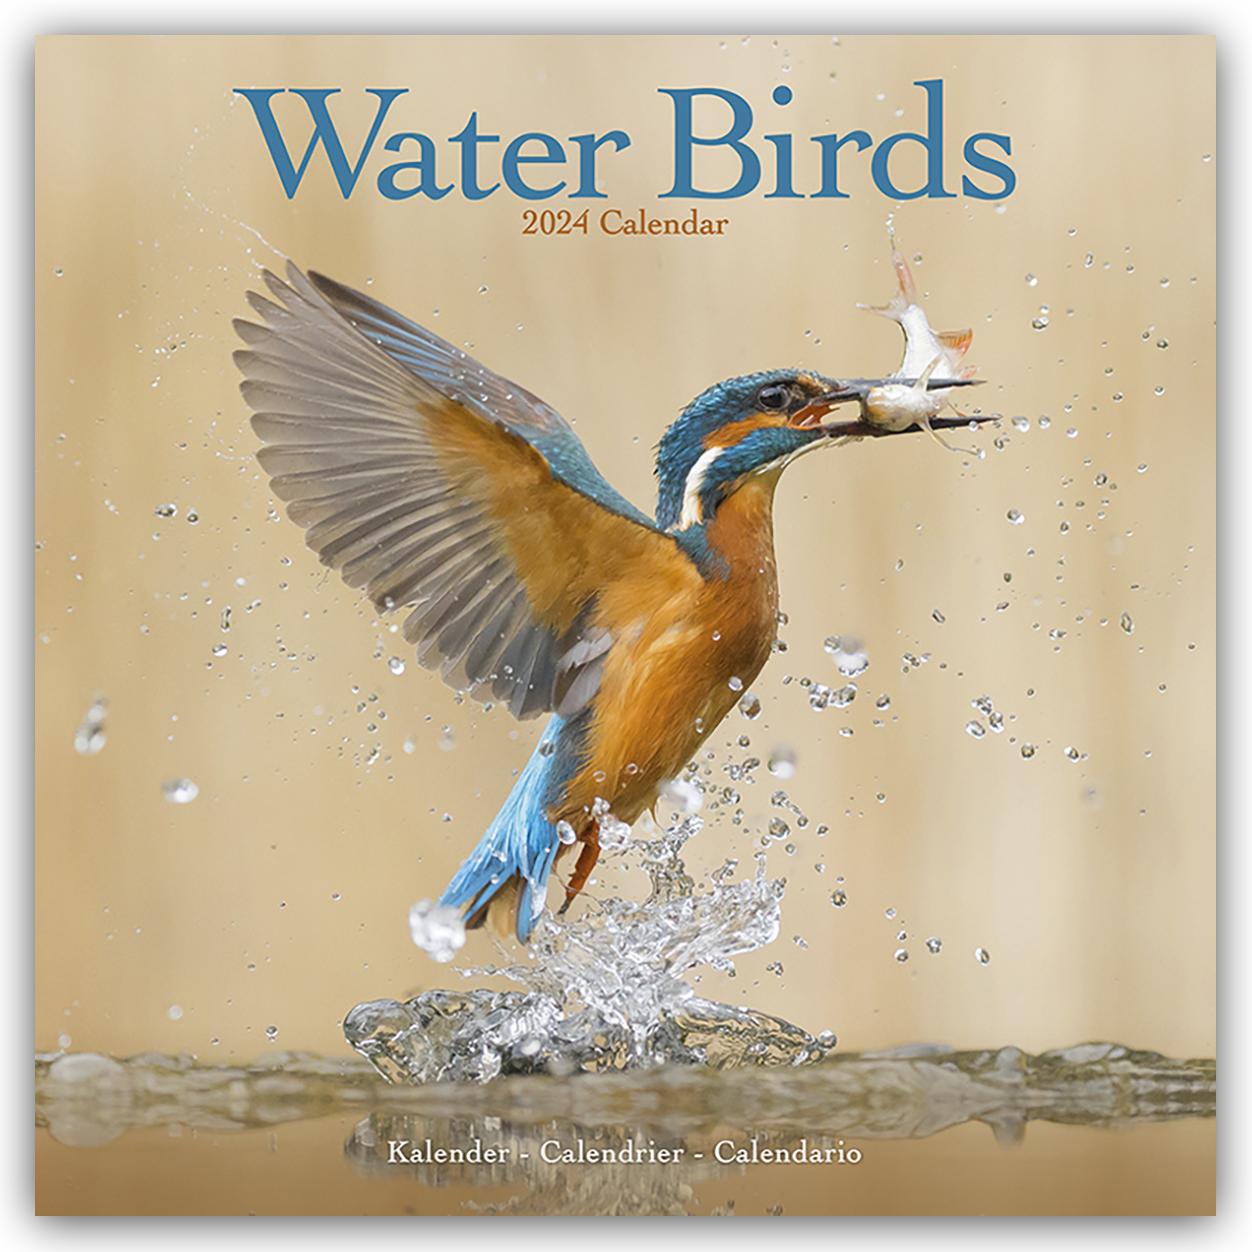 Kalendarz/Pamiętnik Waterbirds Calendar 2024  Square Birds Wall Calendar - 16 Month 